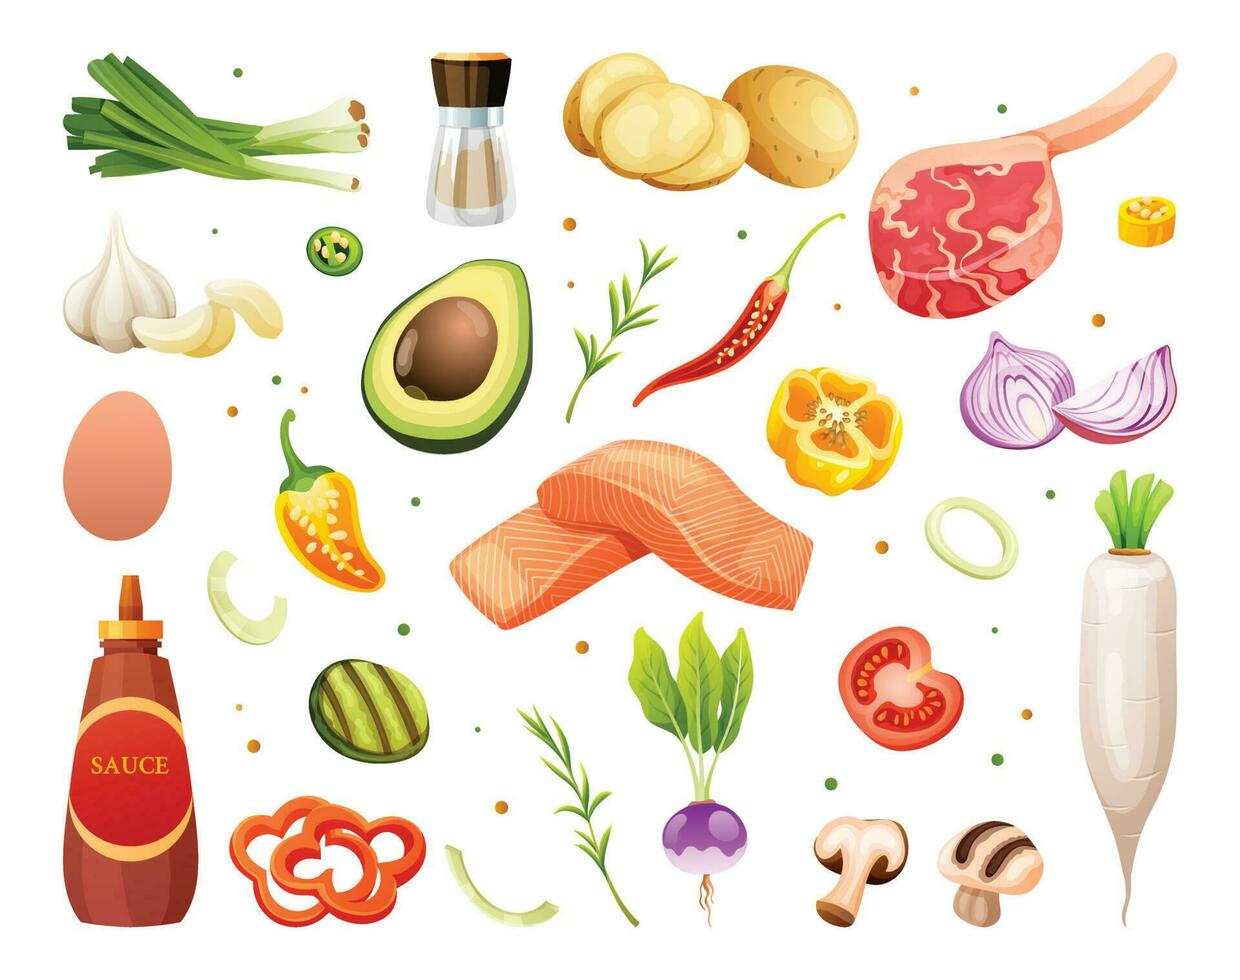 Set of fresh meats, vegetables and herbs illustration. Healthy food ingredients vector cartoon